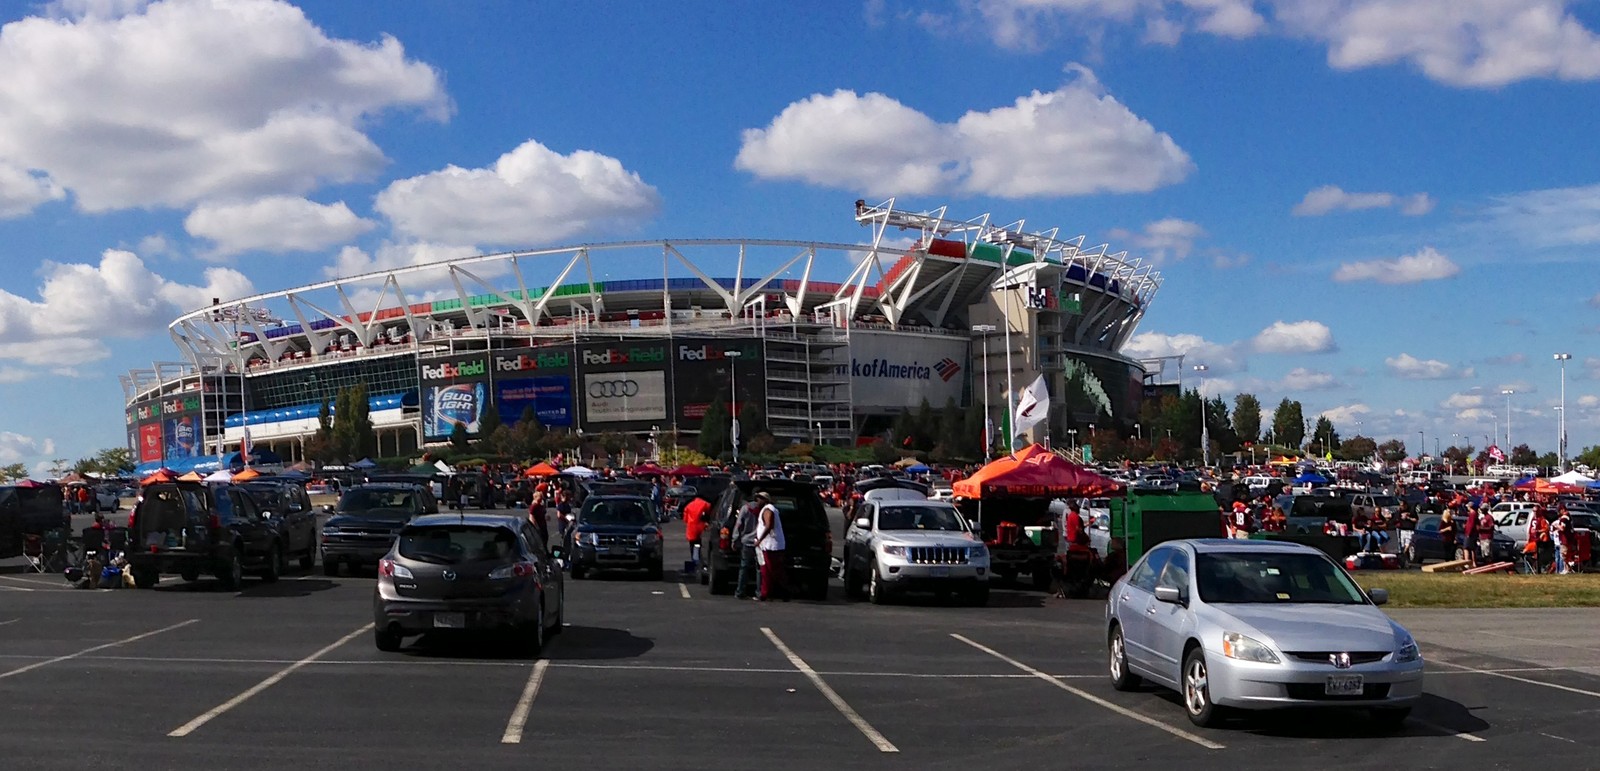 Redskins stadium